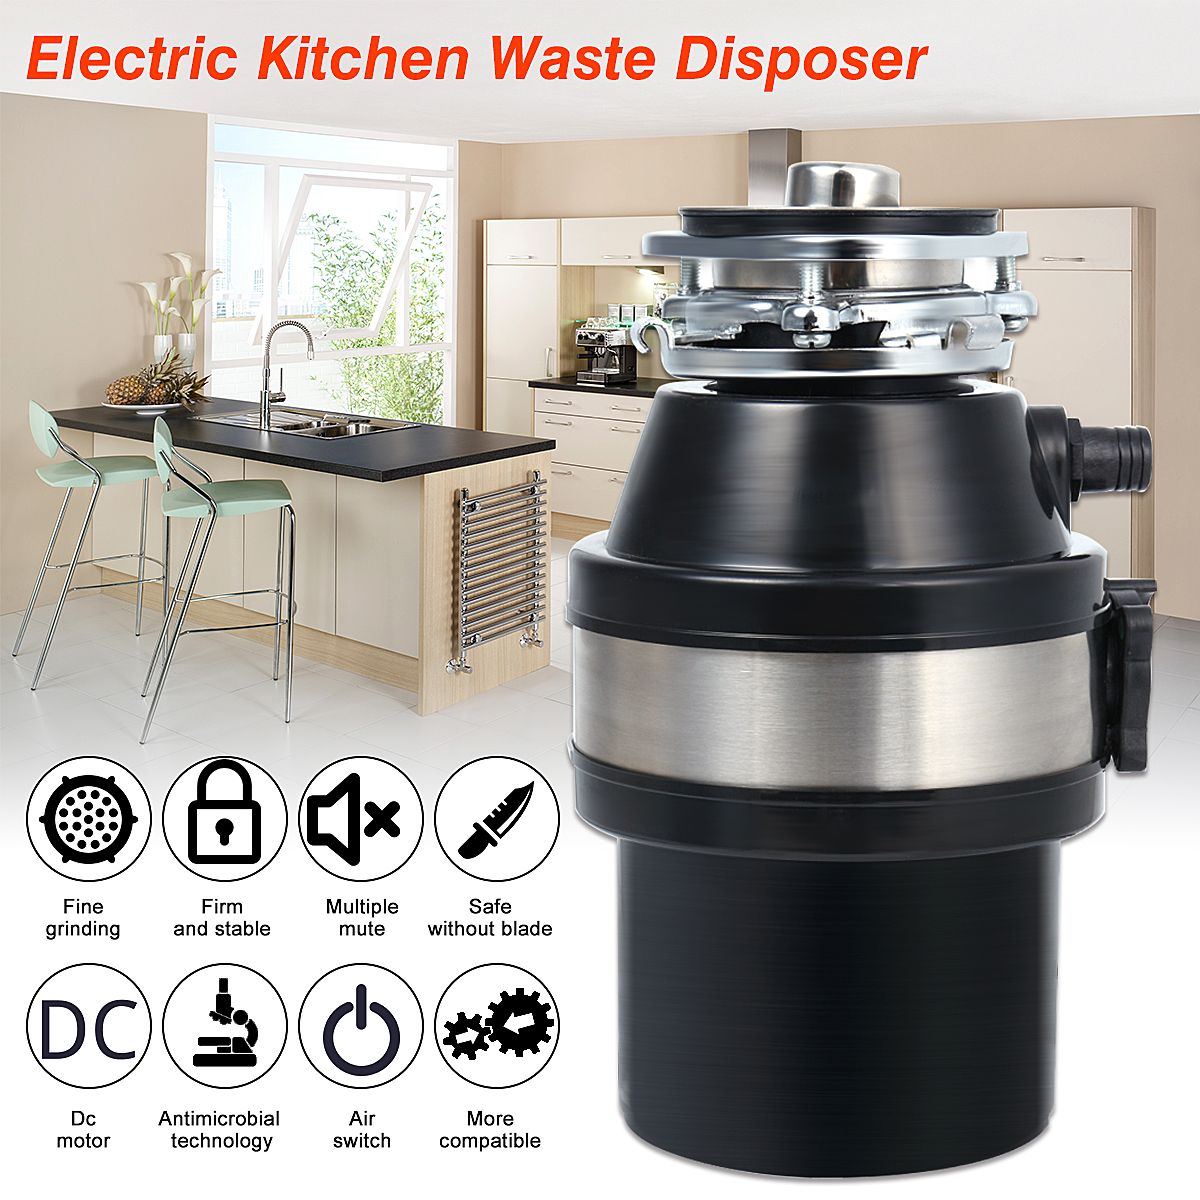 370W-220V-Waste-Disposer-Food-Garbage-Sink-Disposal-Garbage-Disposal-with-Power-Cord-US-Plug-1228098